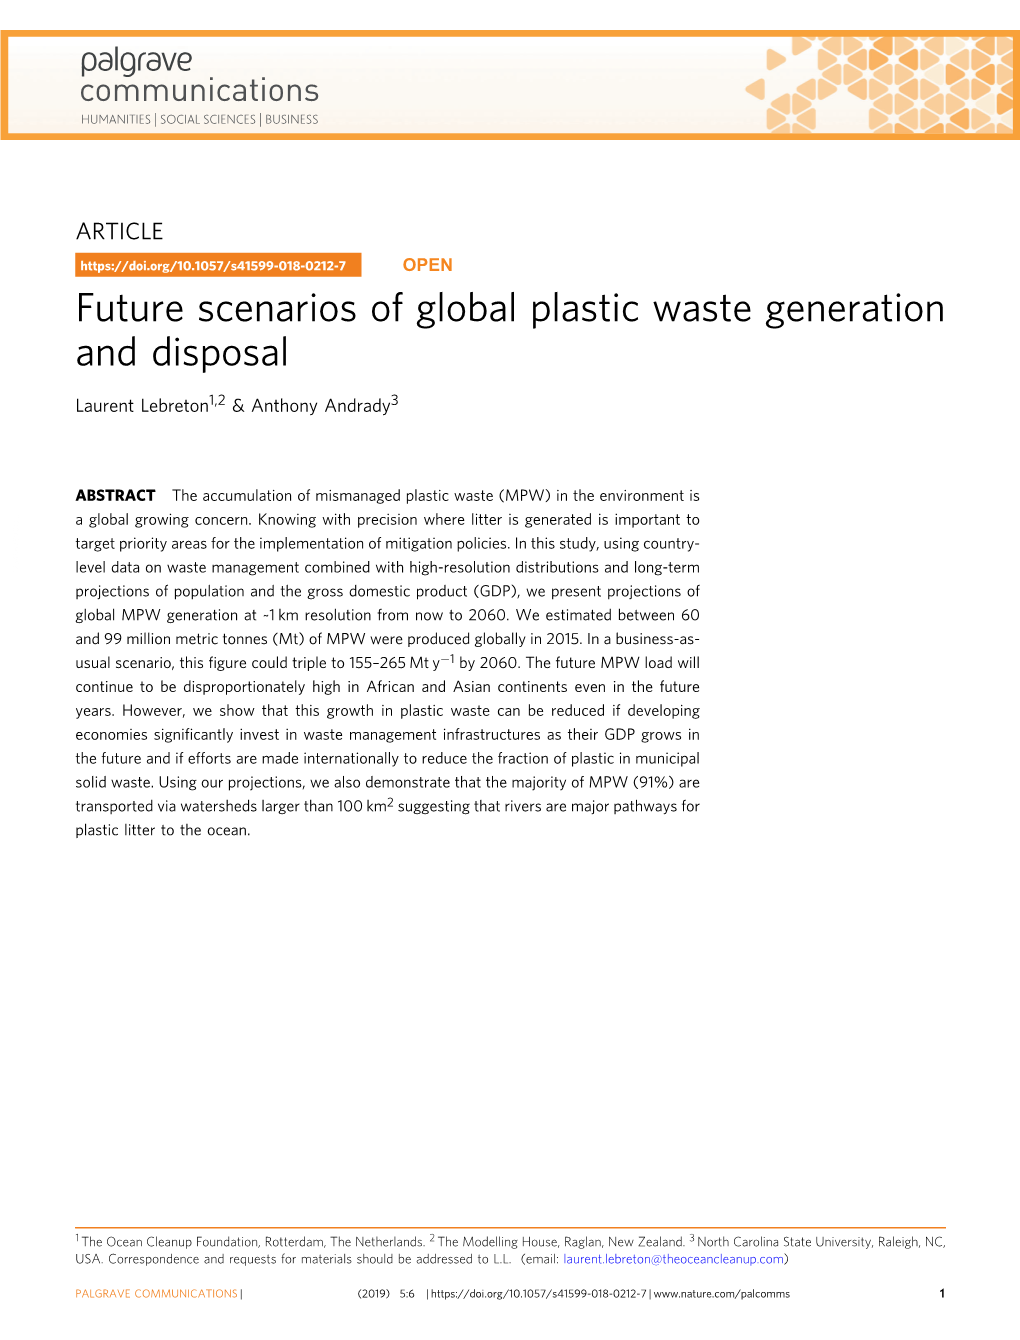 Future Scenarios of Global Plastic Waste Generation and Disposal